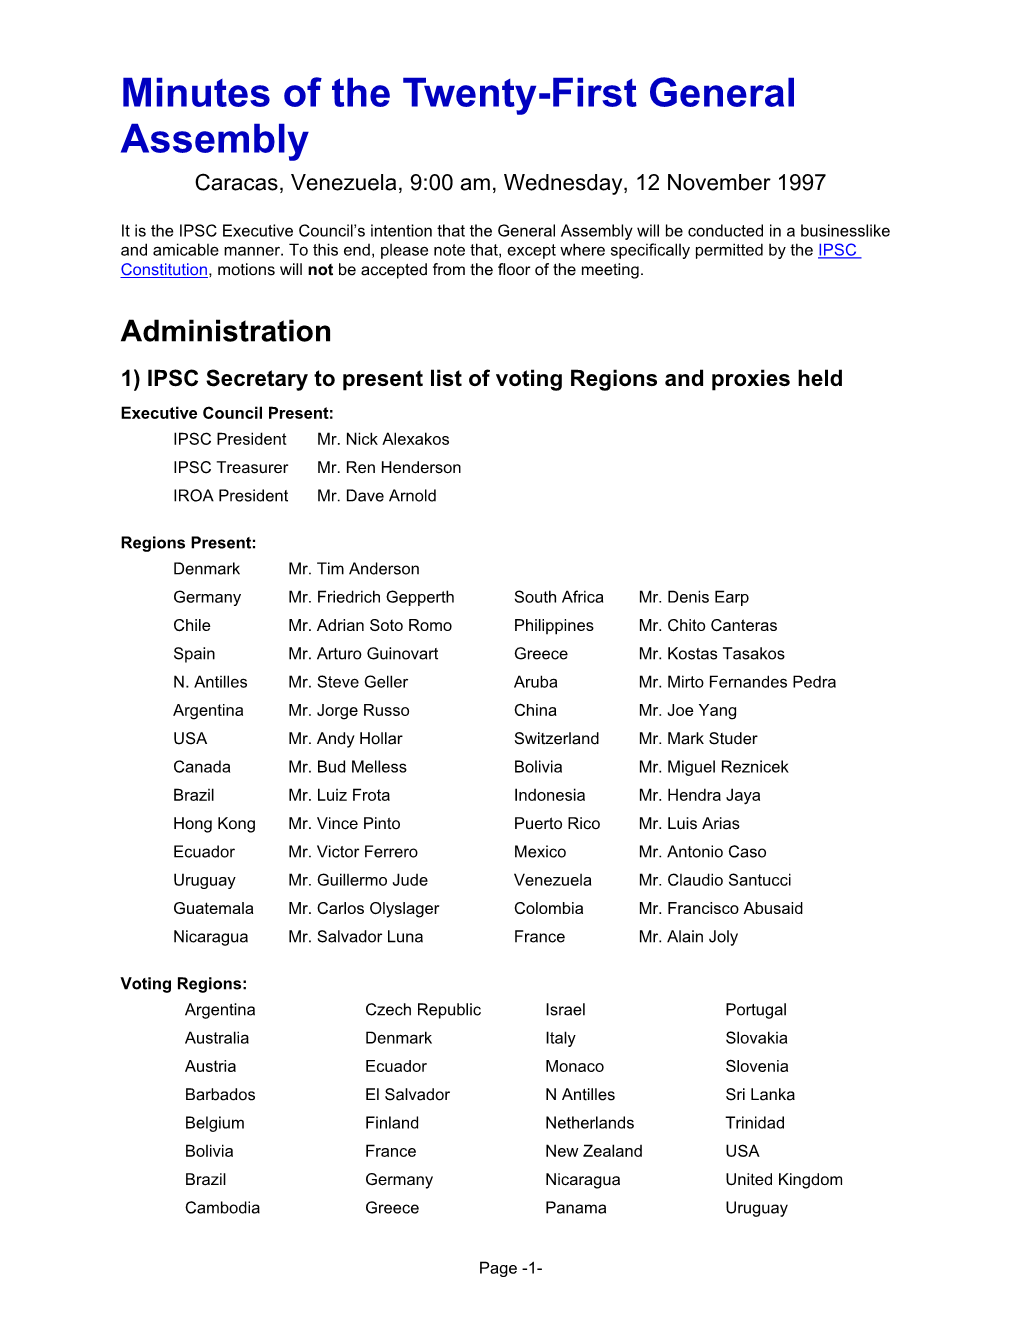 Minutes of the Twenty-First General Assembly Caracas, Venezuela, 9:00 Am, Wednesday, 12 November 1997